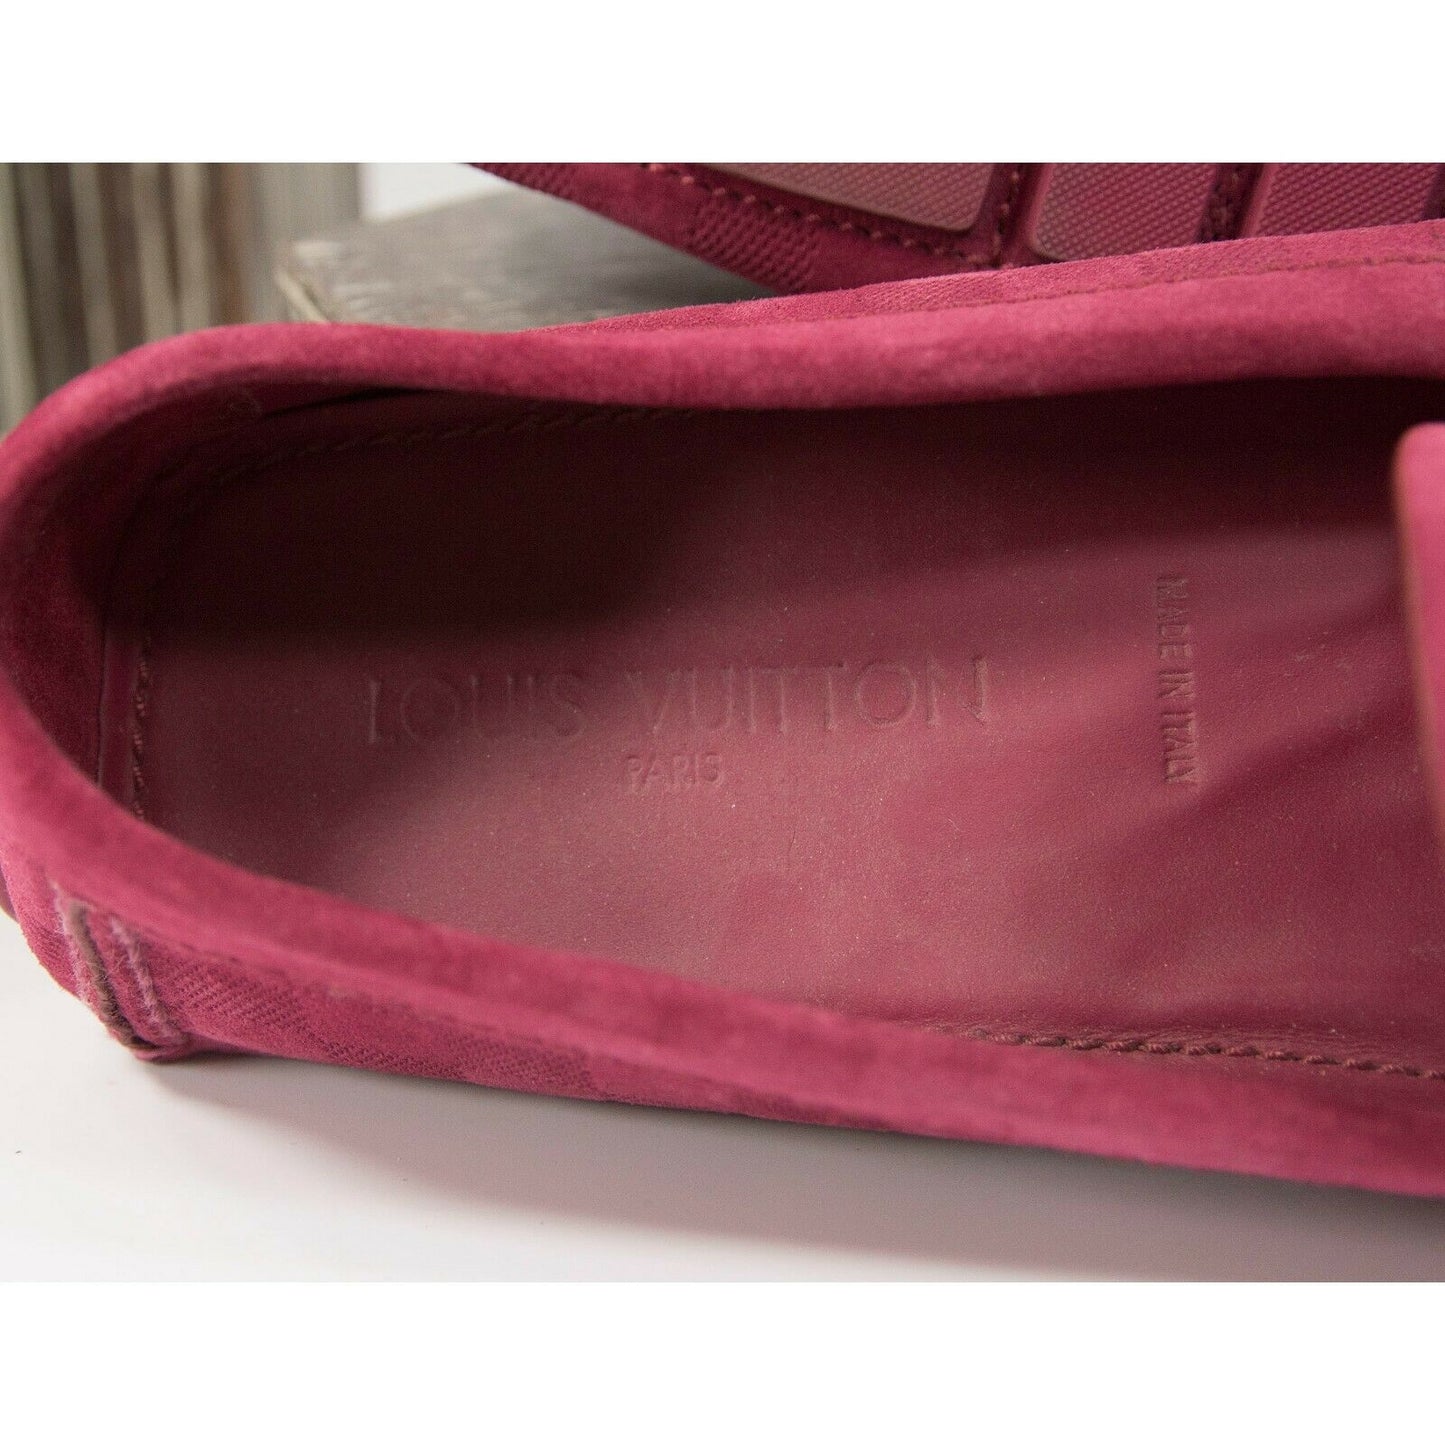 Louis Vuitton Damier Cranberry Suede Vintage Penny Loafer Driving Moccasin Sz 12